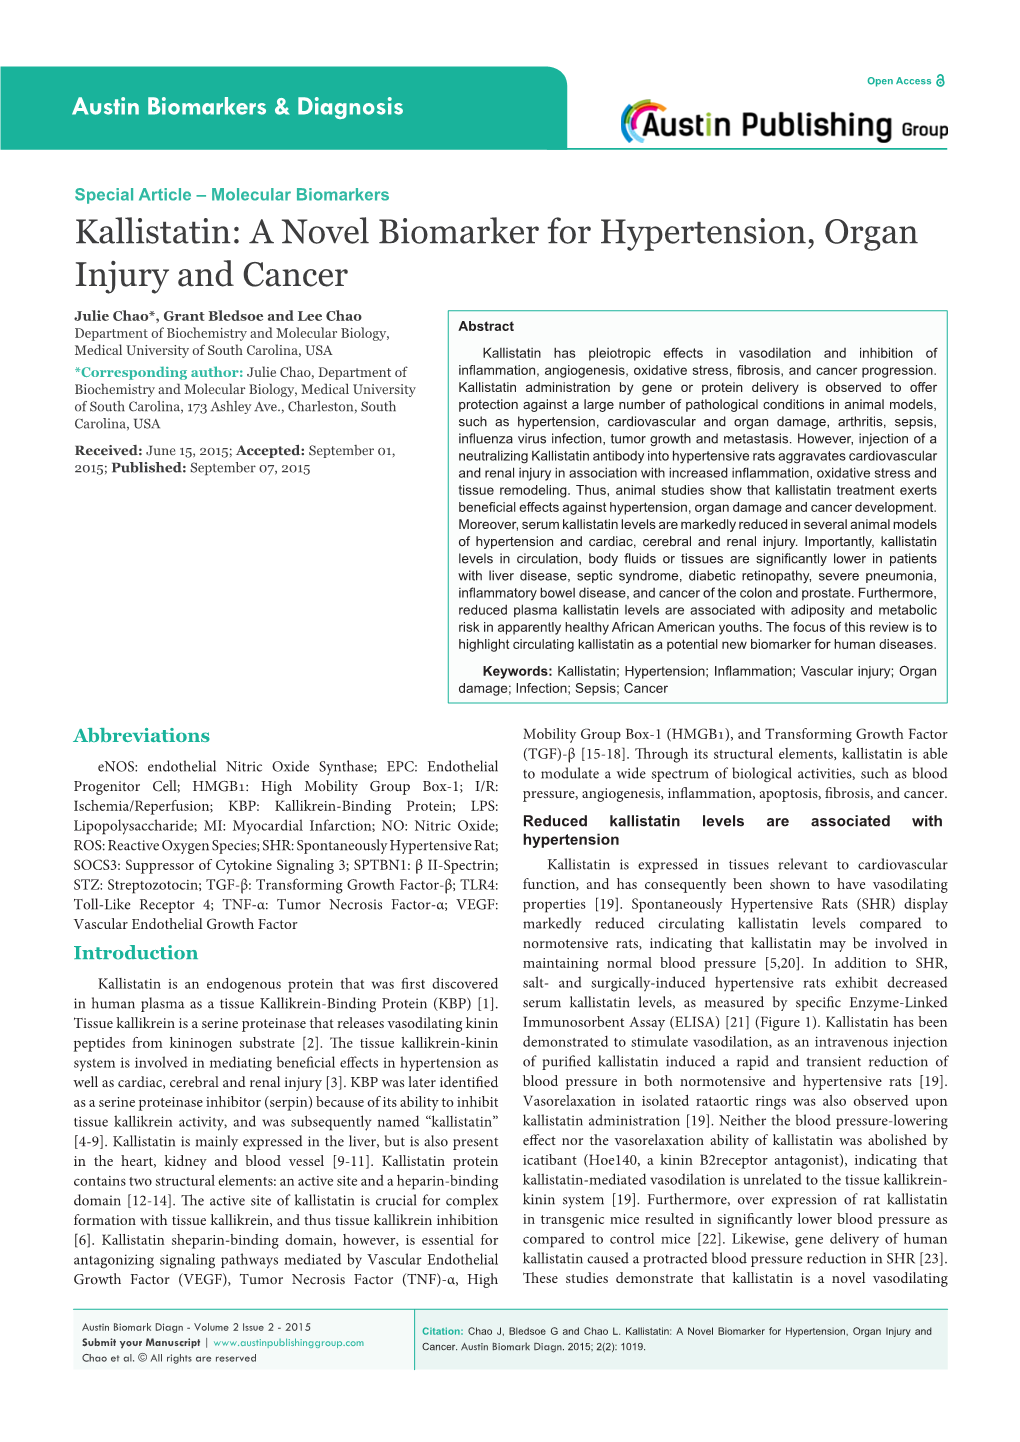 Kallistatin: a Novel Biomarker for Hypertension, Organ Injury and Cancer